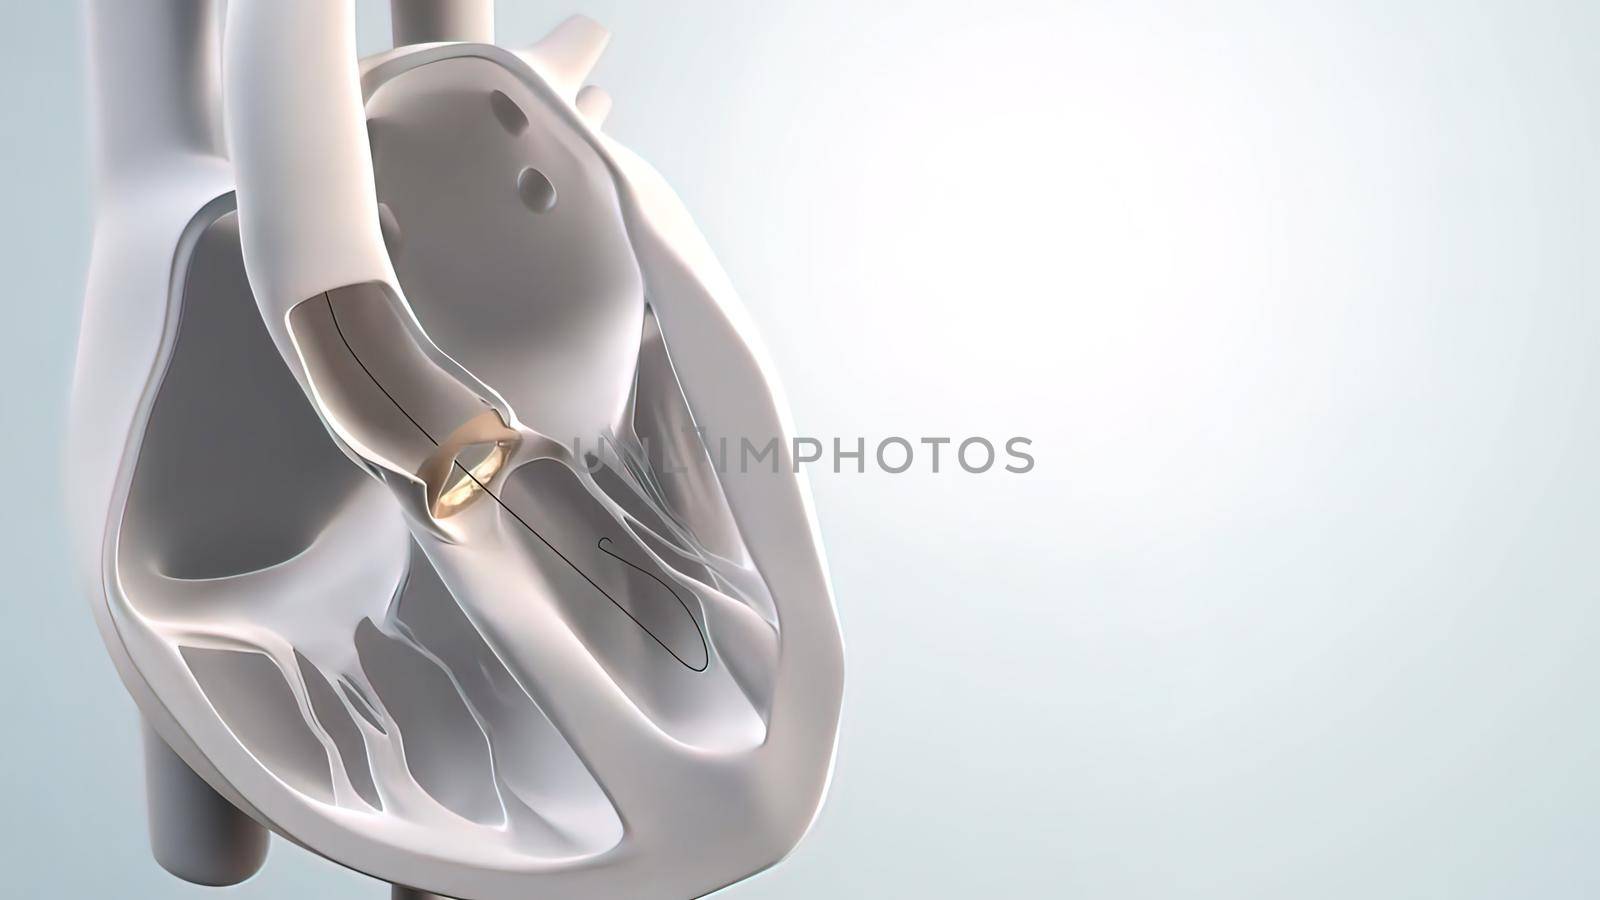 Expansion of transcatheter aortic valve implantation.3D Medical 3D Render .